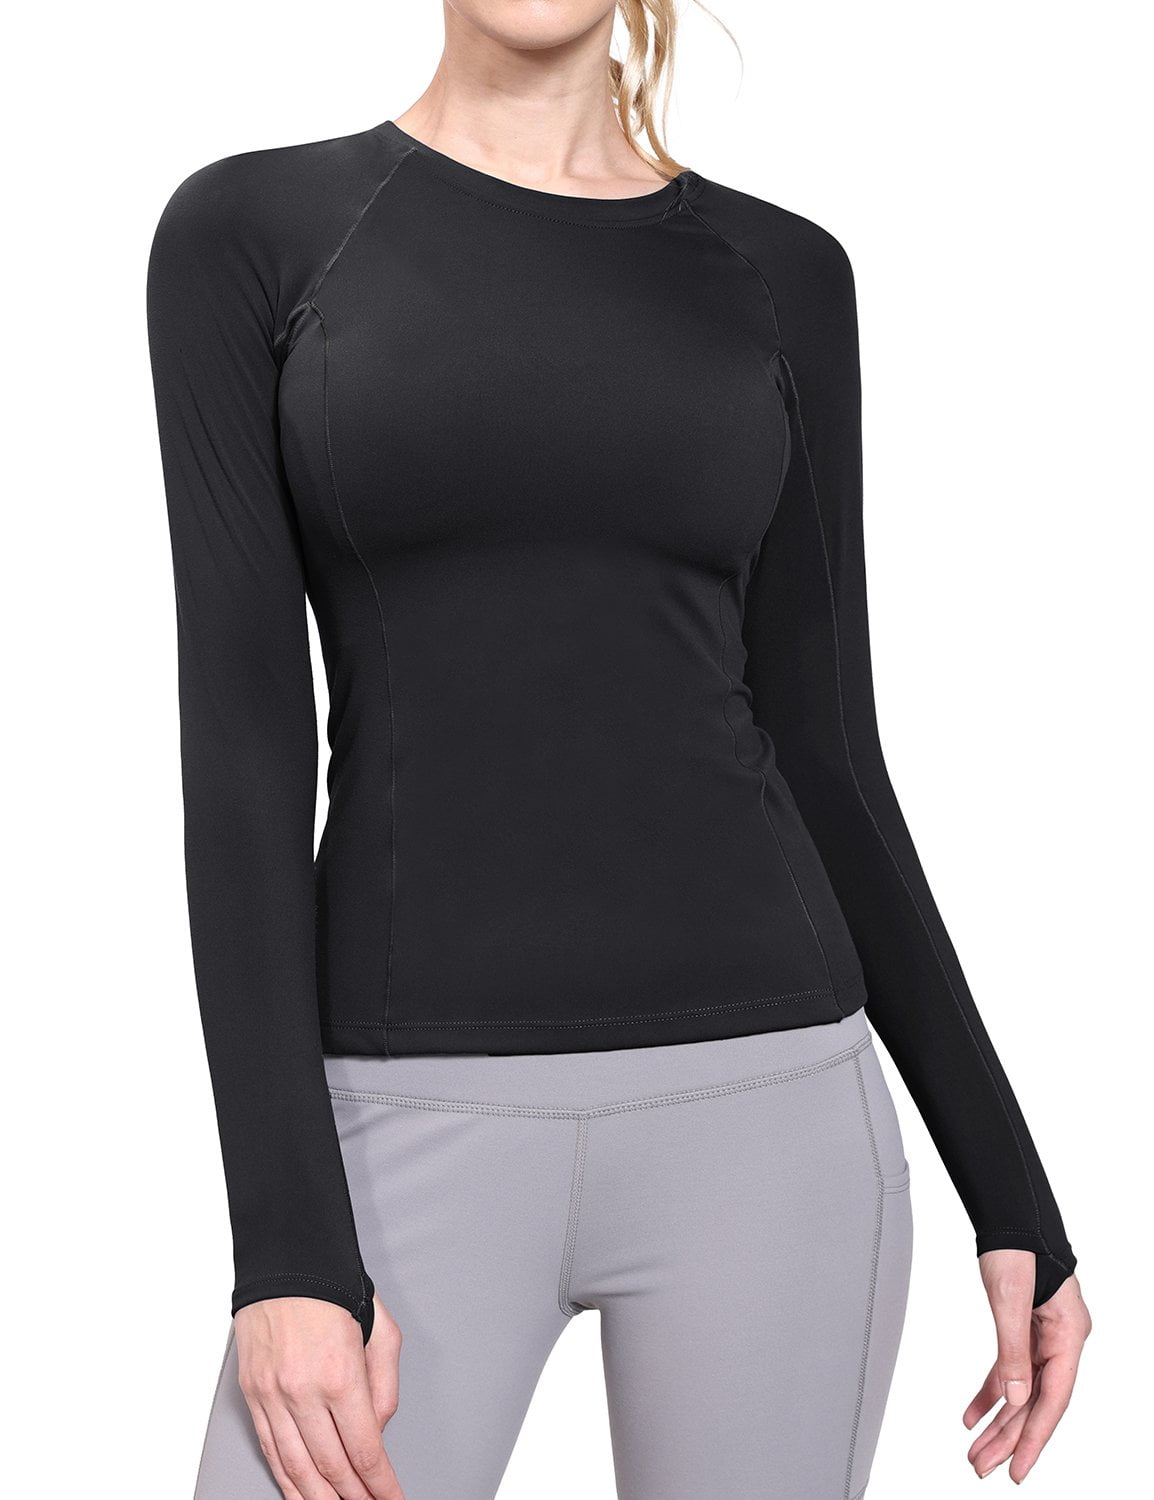 BALEAF Women's Long Sleeve Crop Top Slim Fit Workout Shirts for Running Gym Yoga 